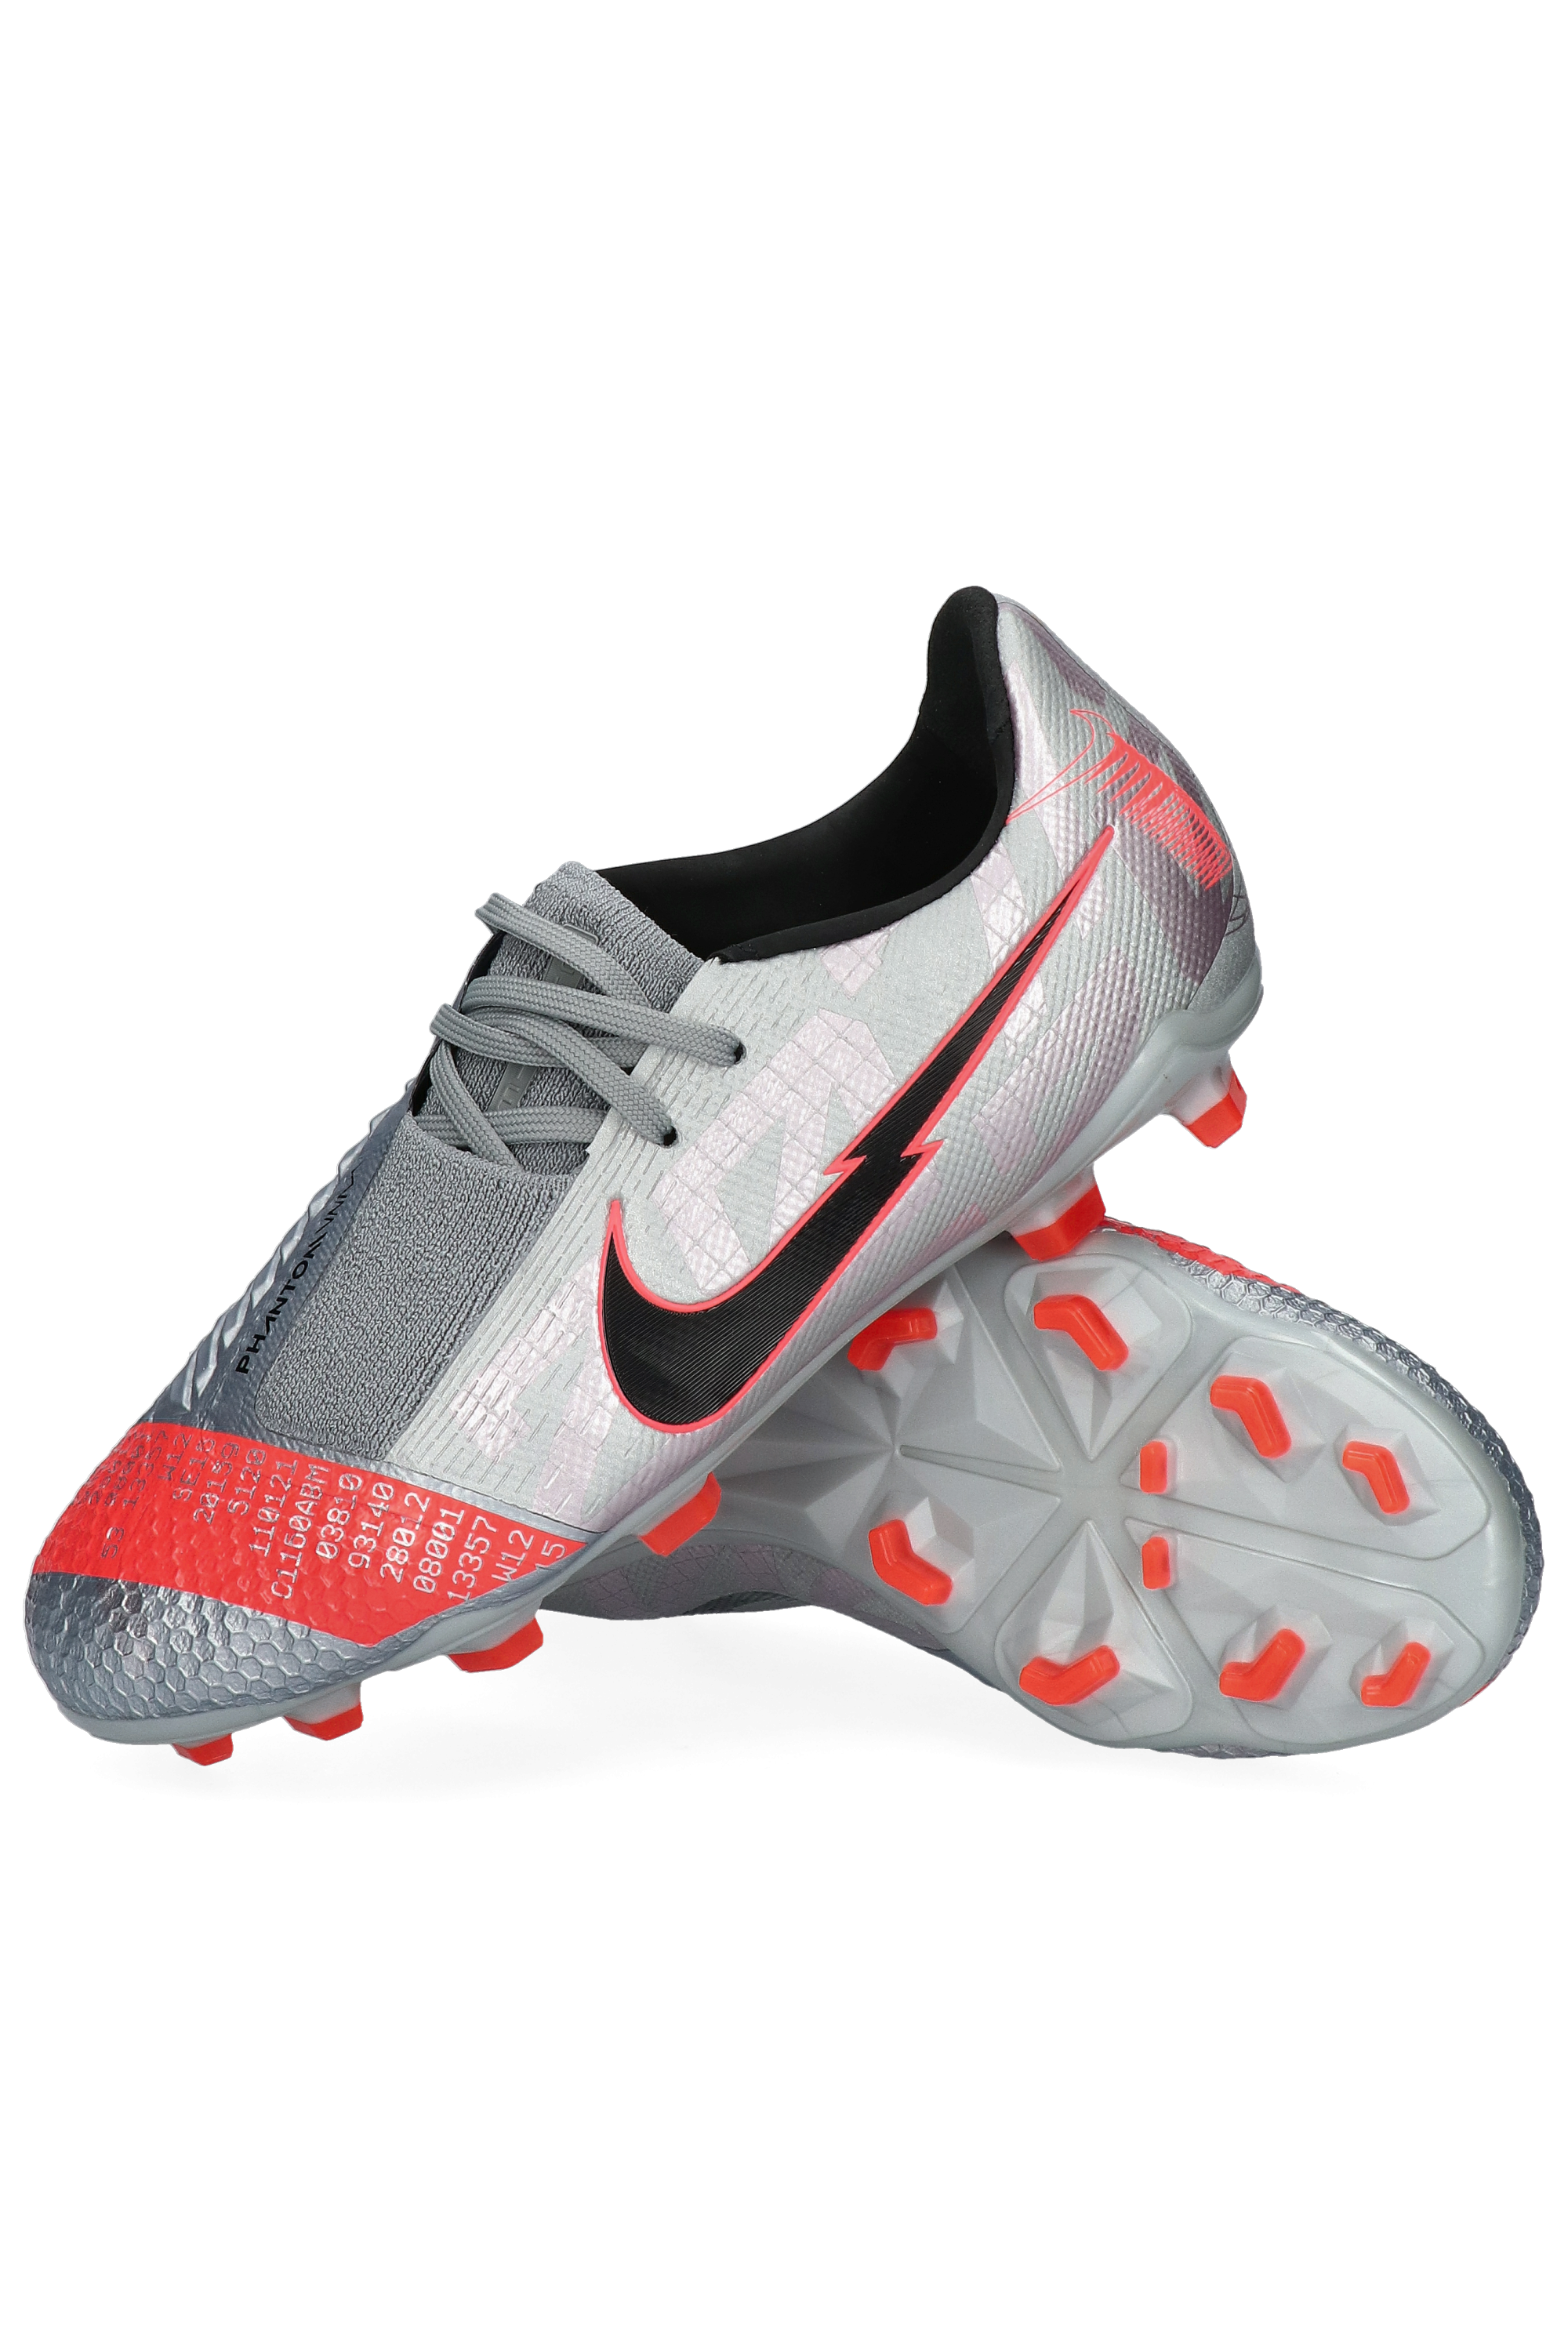 Nike Phantom VNM Elite FG Junior | R-GOL.com - Football boots \u0026 equipment